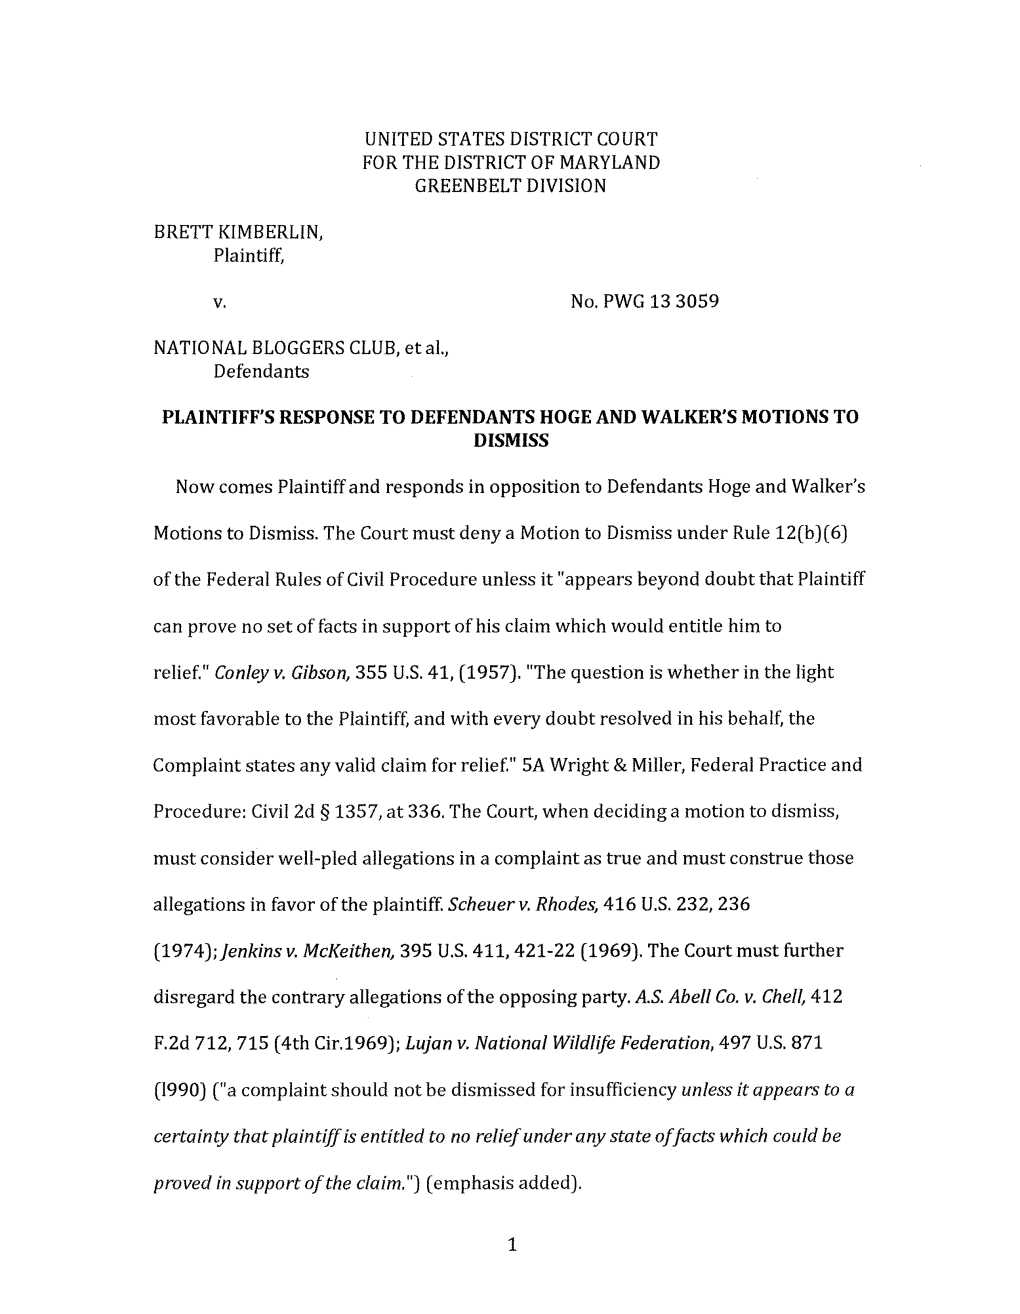 Plaintiff's Response to Defendants Hoge and Walker's Motions to Dismiss